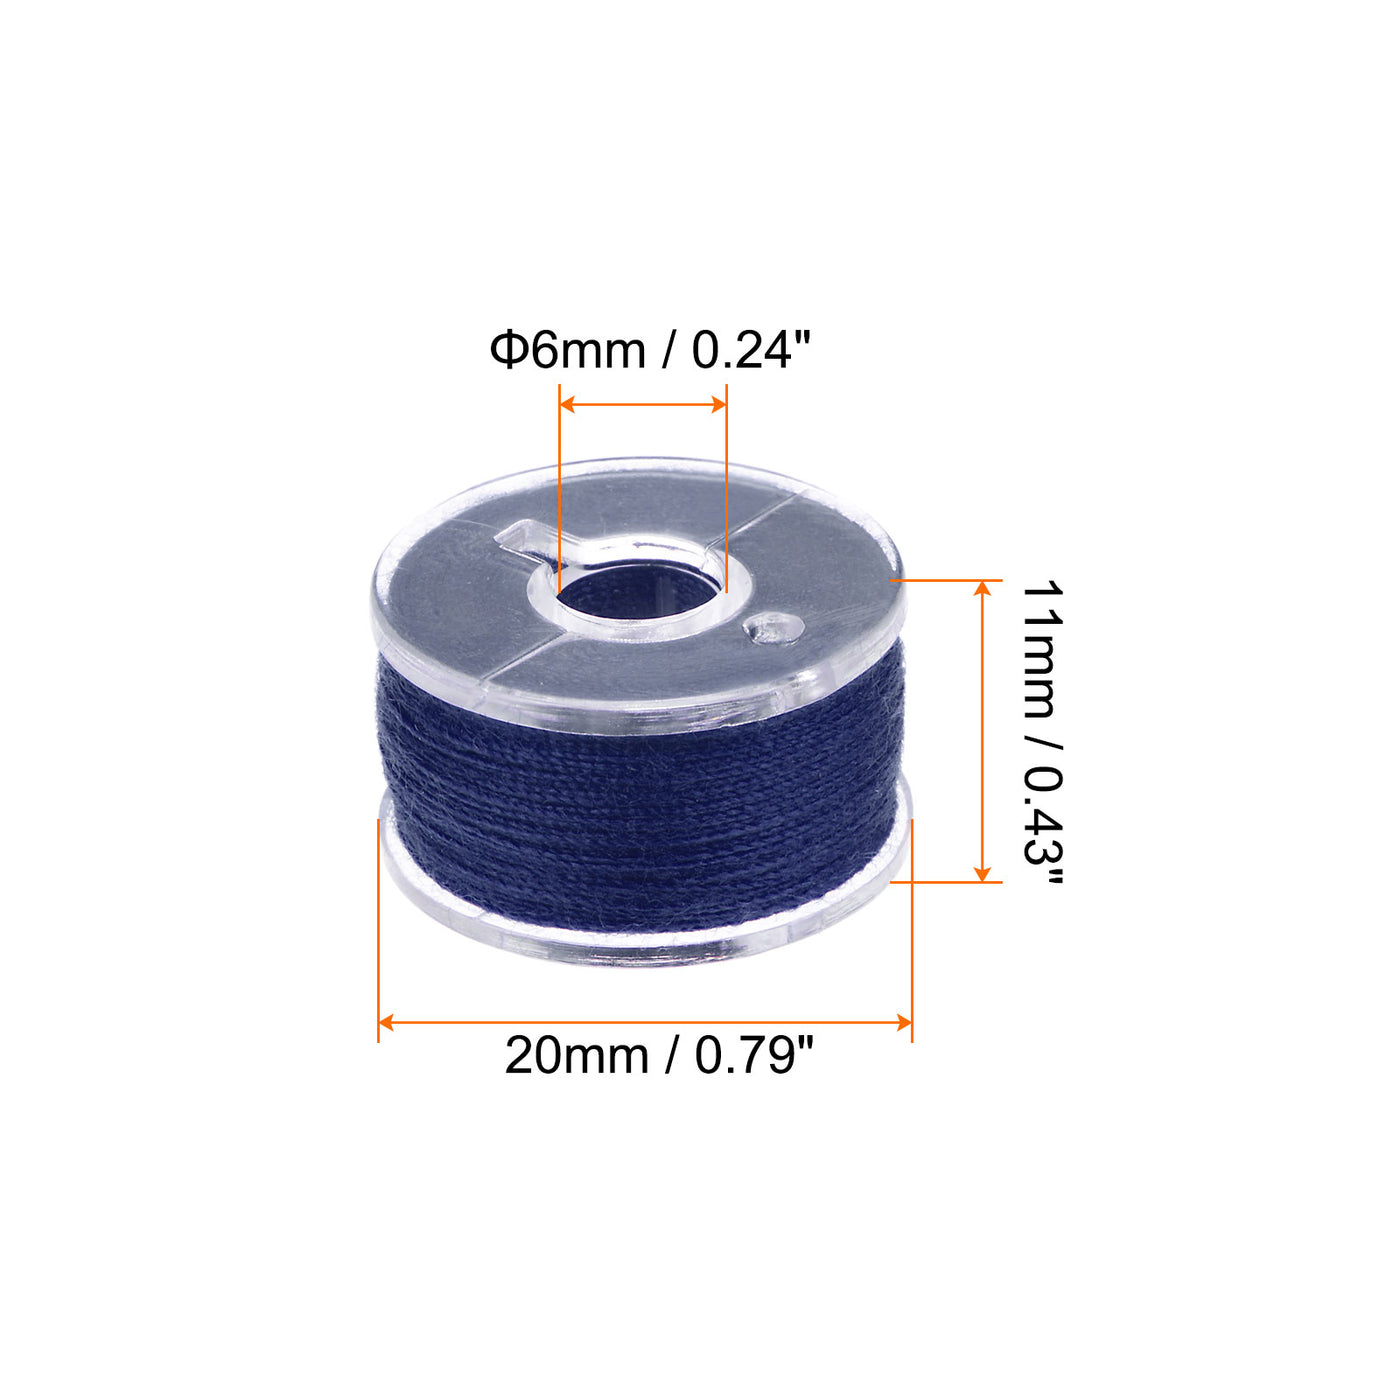 Harfington Prewound Sewing Bobbin Thread Set of 10pcs W Storage Plastic Case, Blue Series